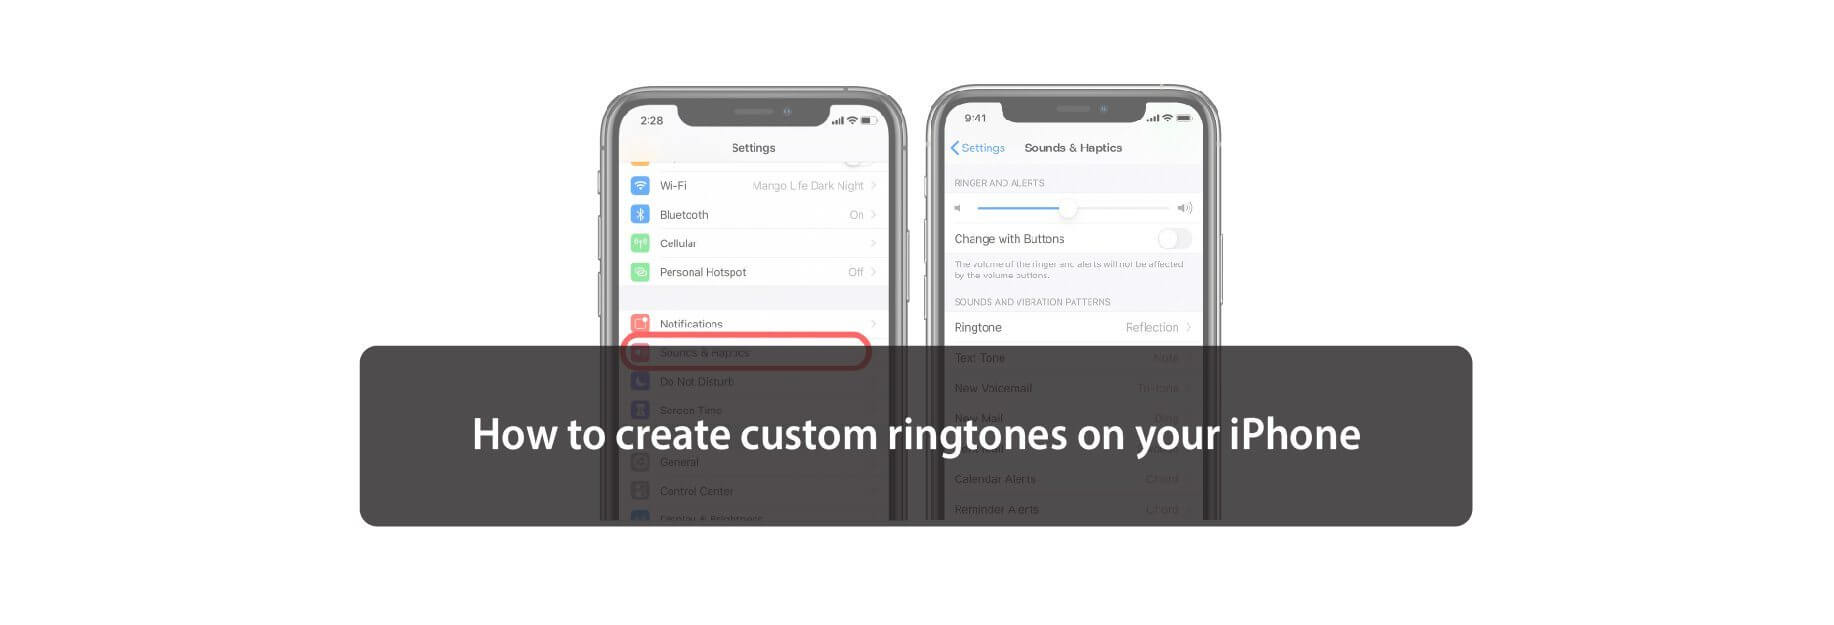 How to create custom ringtones on your iPhone